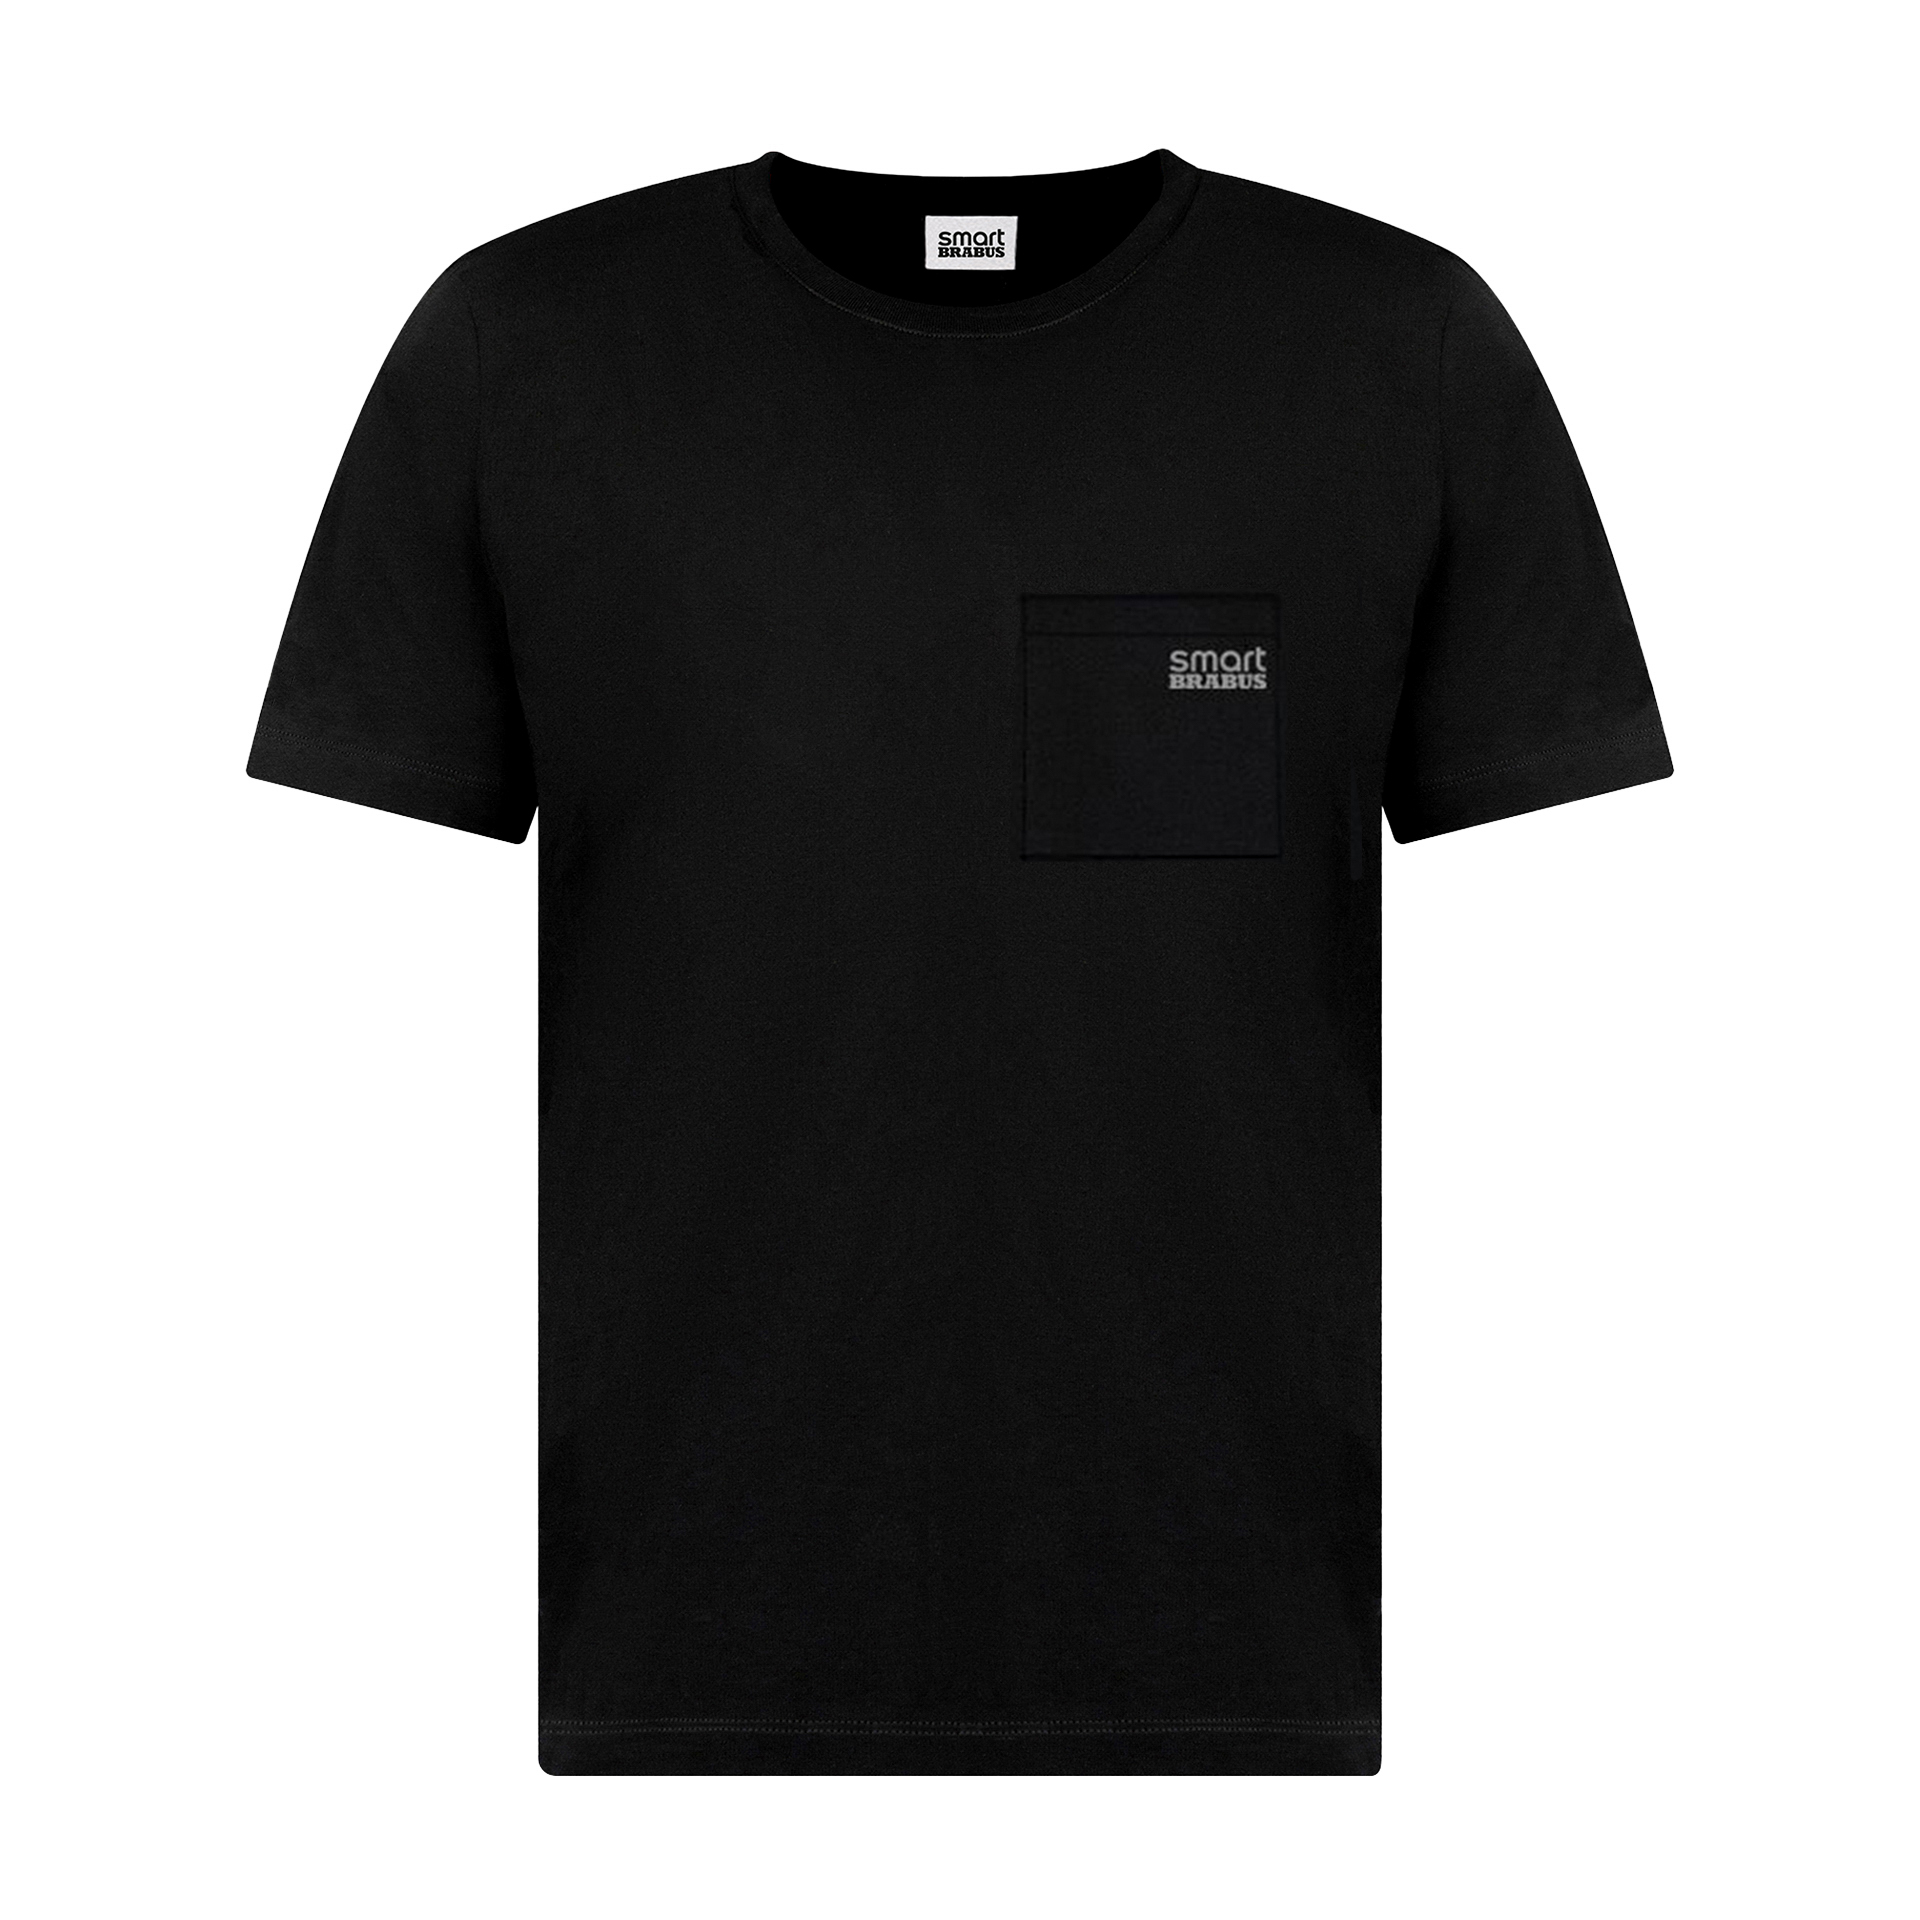 smart x BRABUS T-Shirt unisex schwarz